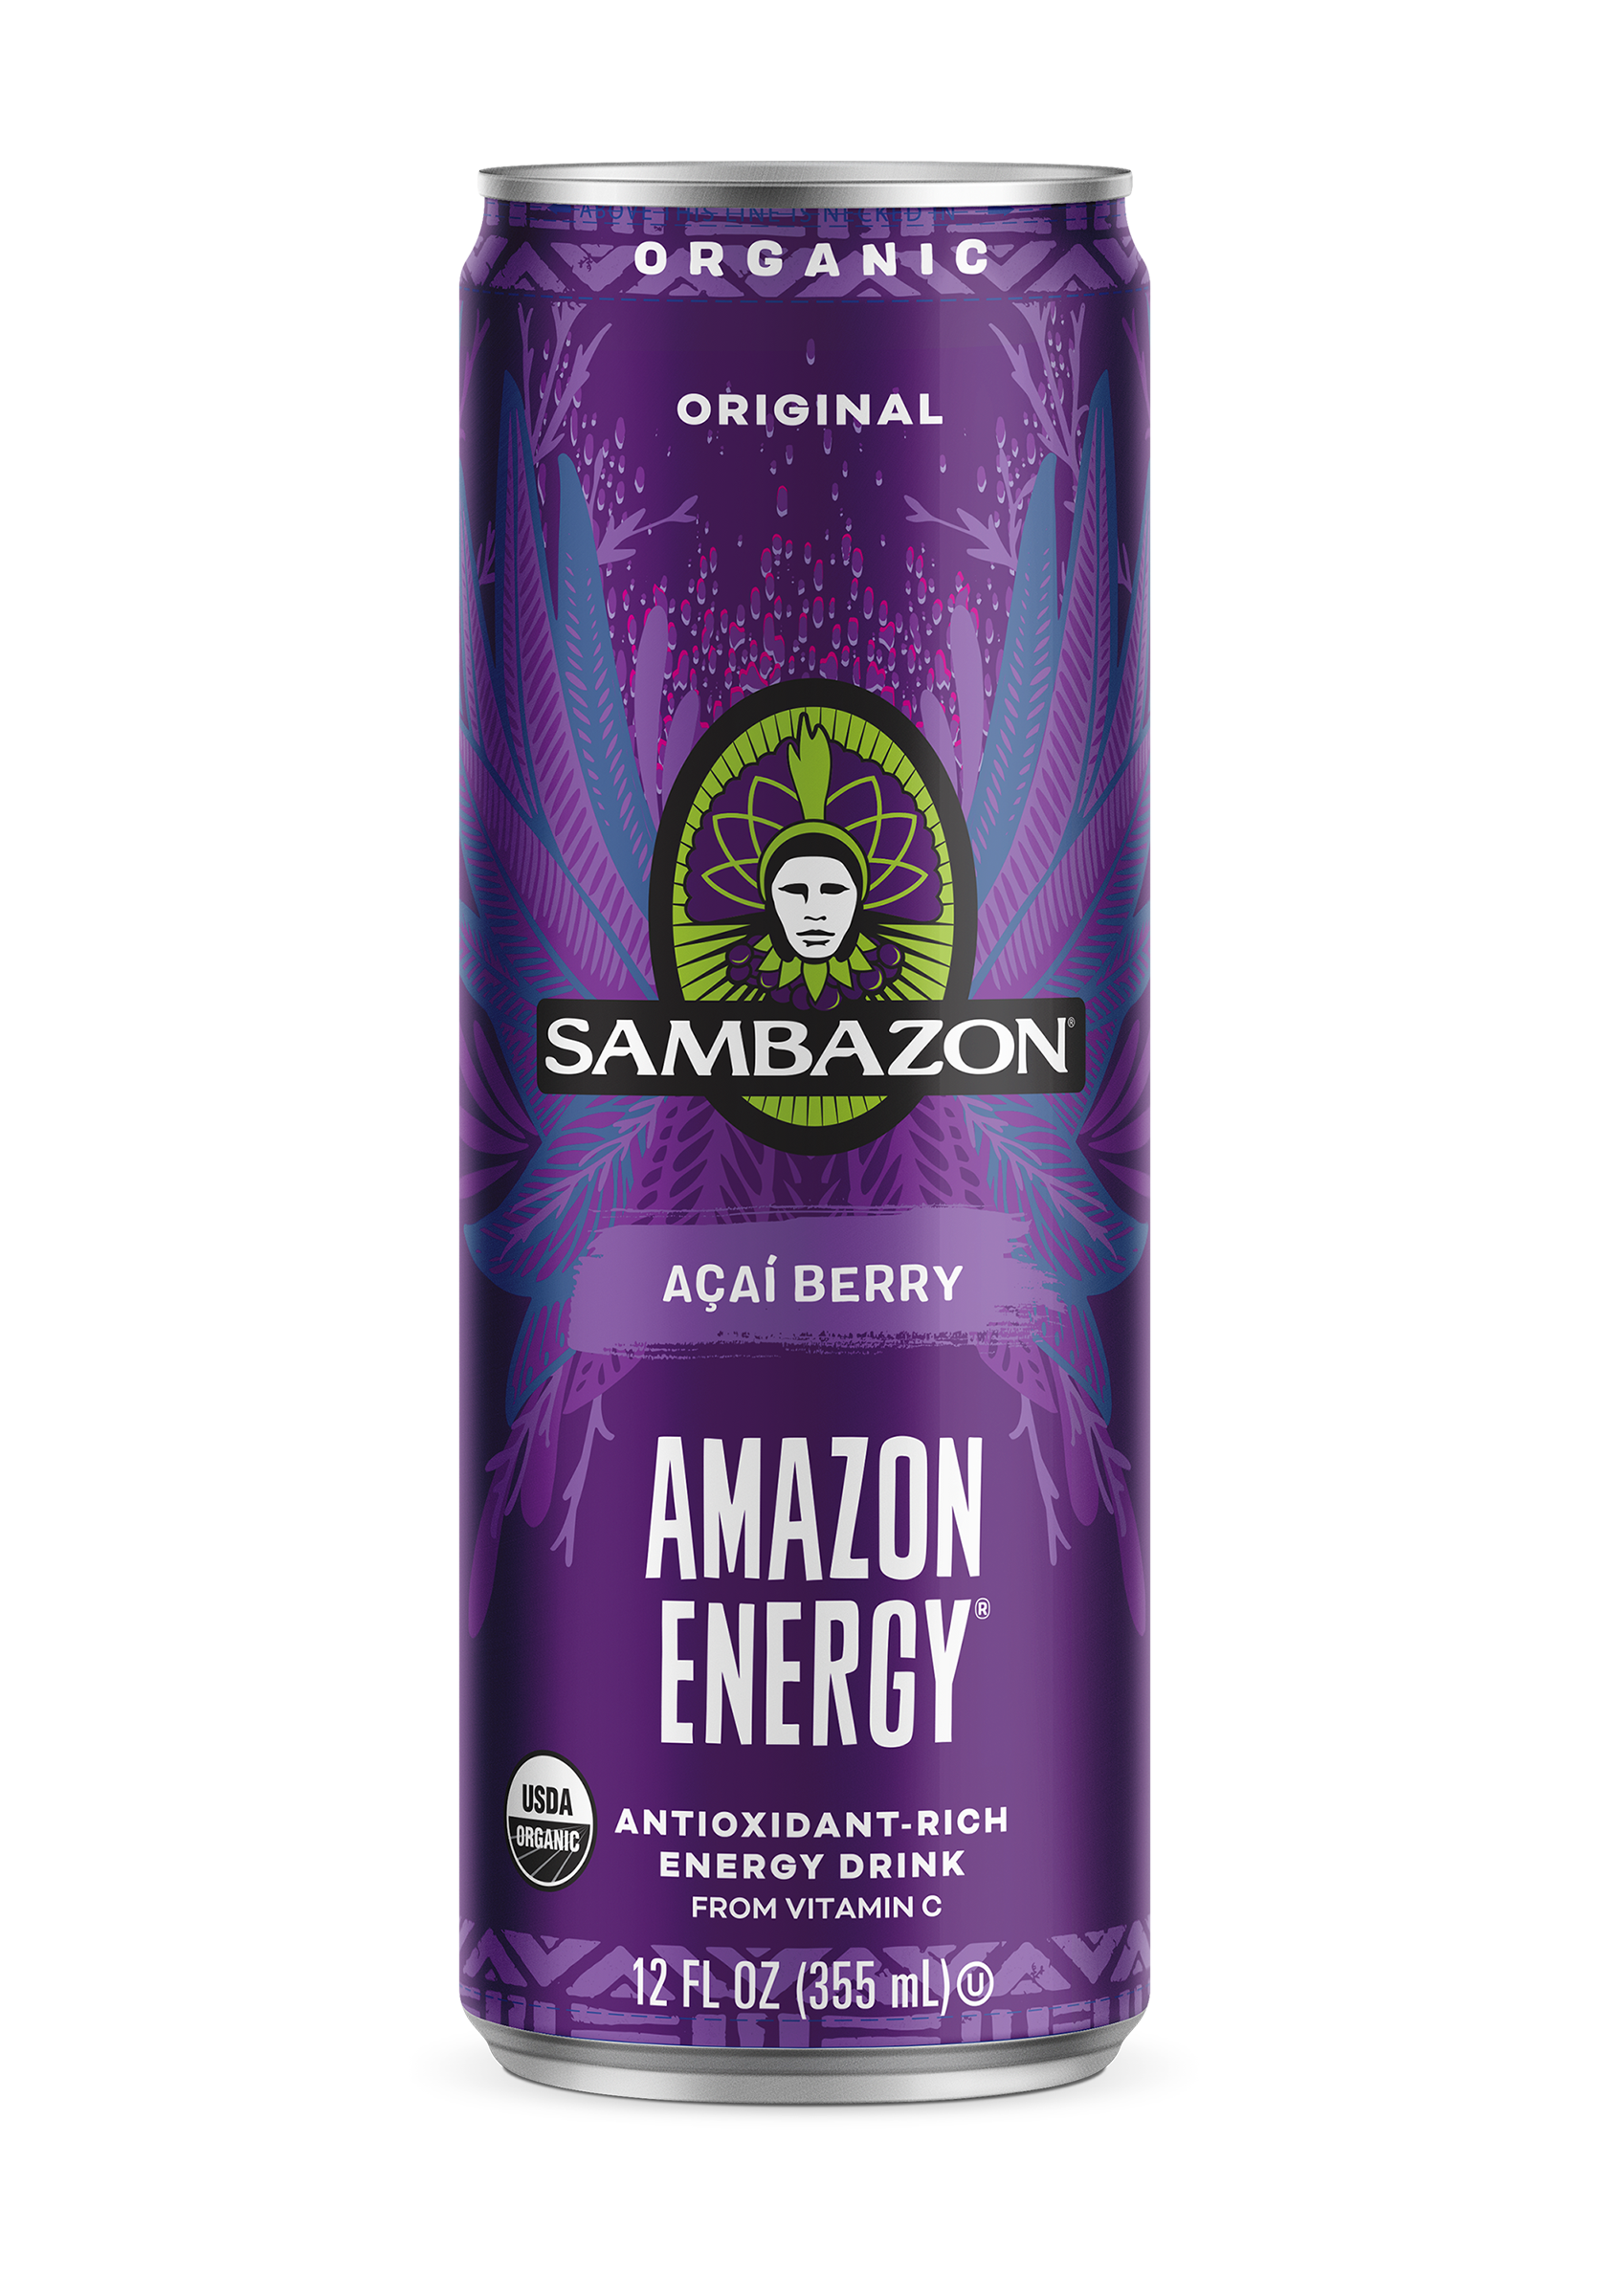 Sambazon Amazon Energy Original - 12pk 12 units per case 12.0 oz